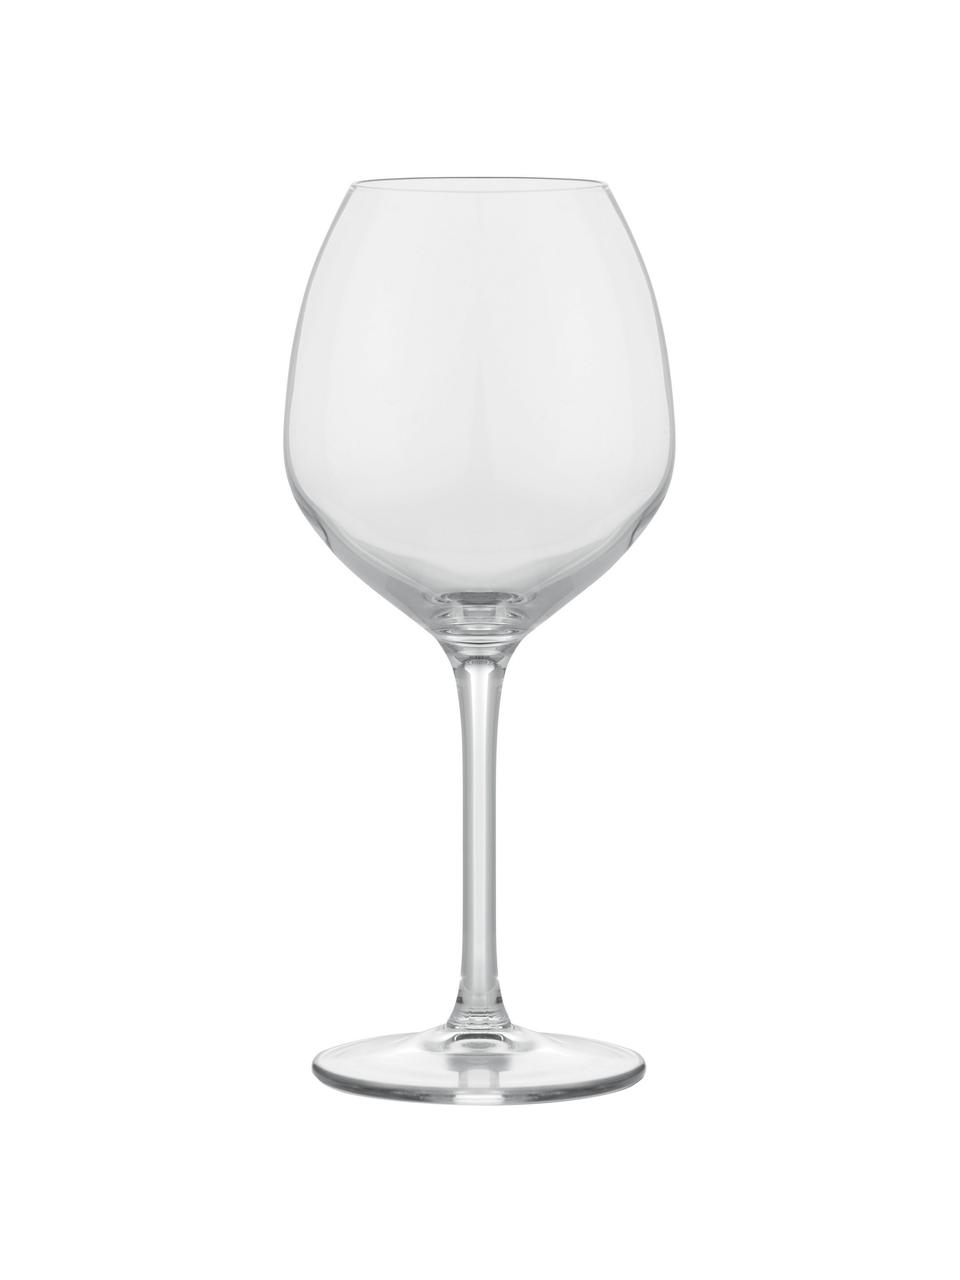 Weißweingläser Premium, 2 Stück, Bleifreies Glas, Transparent, Ø 10 x H 22 cm, 540 ml